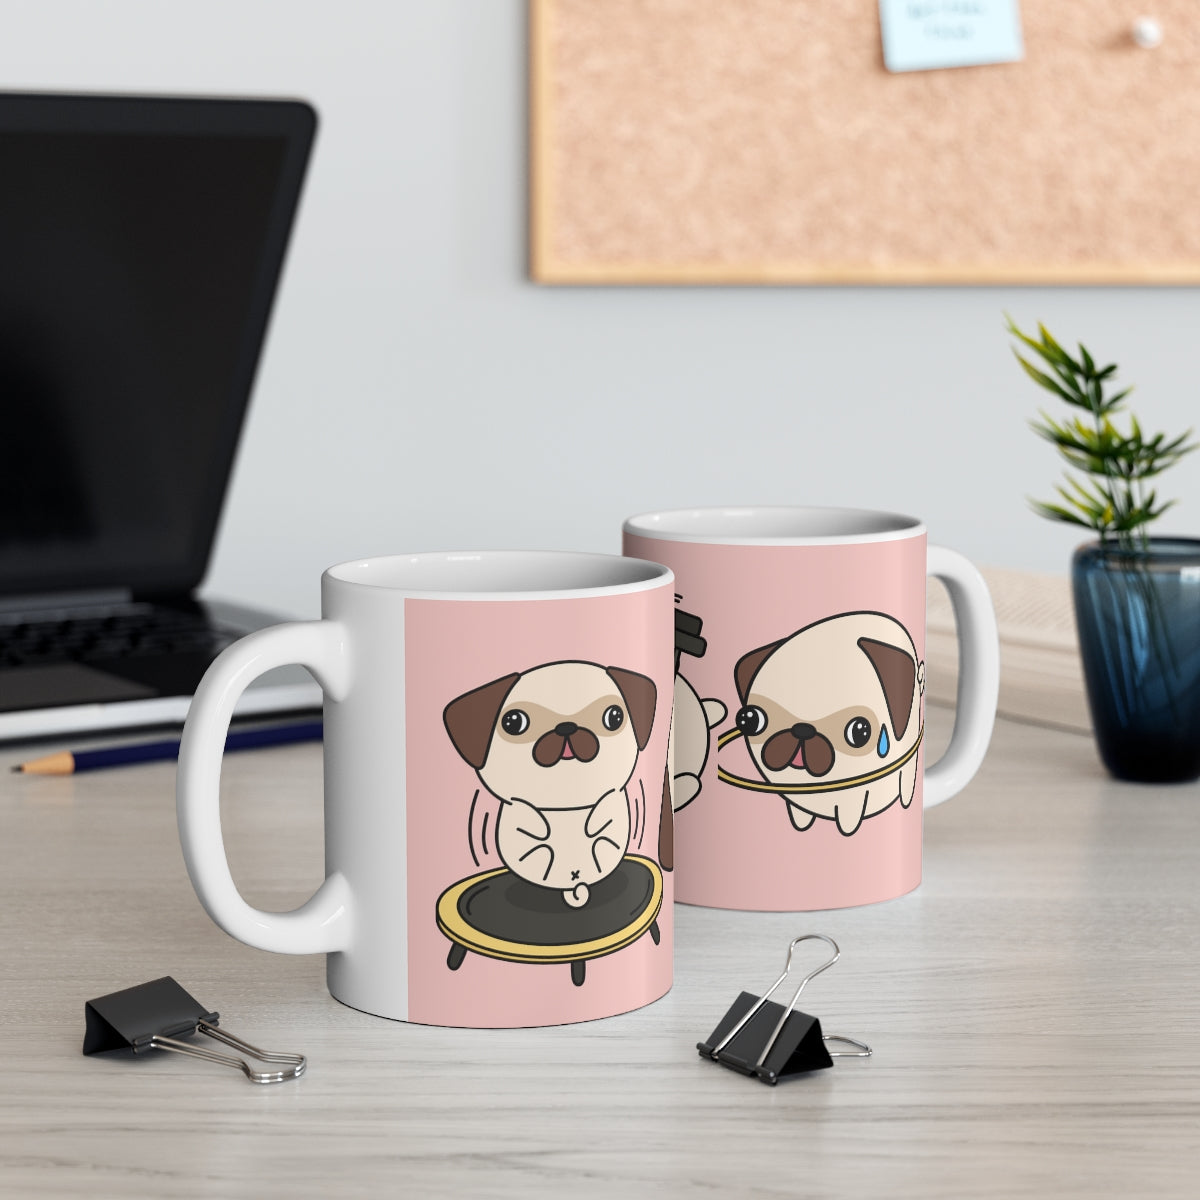 Ceramic Mug 11oz, Puppy Mug